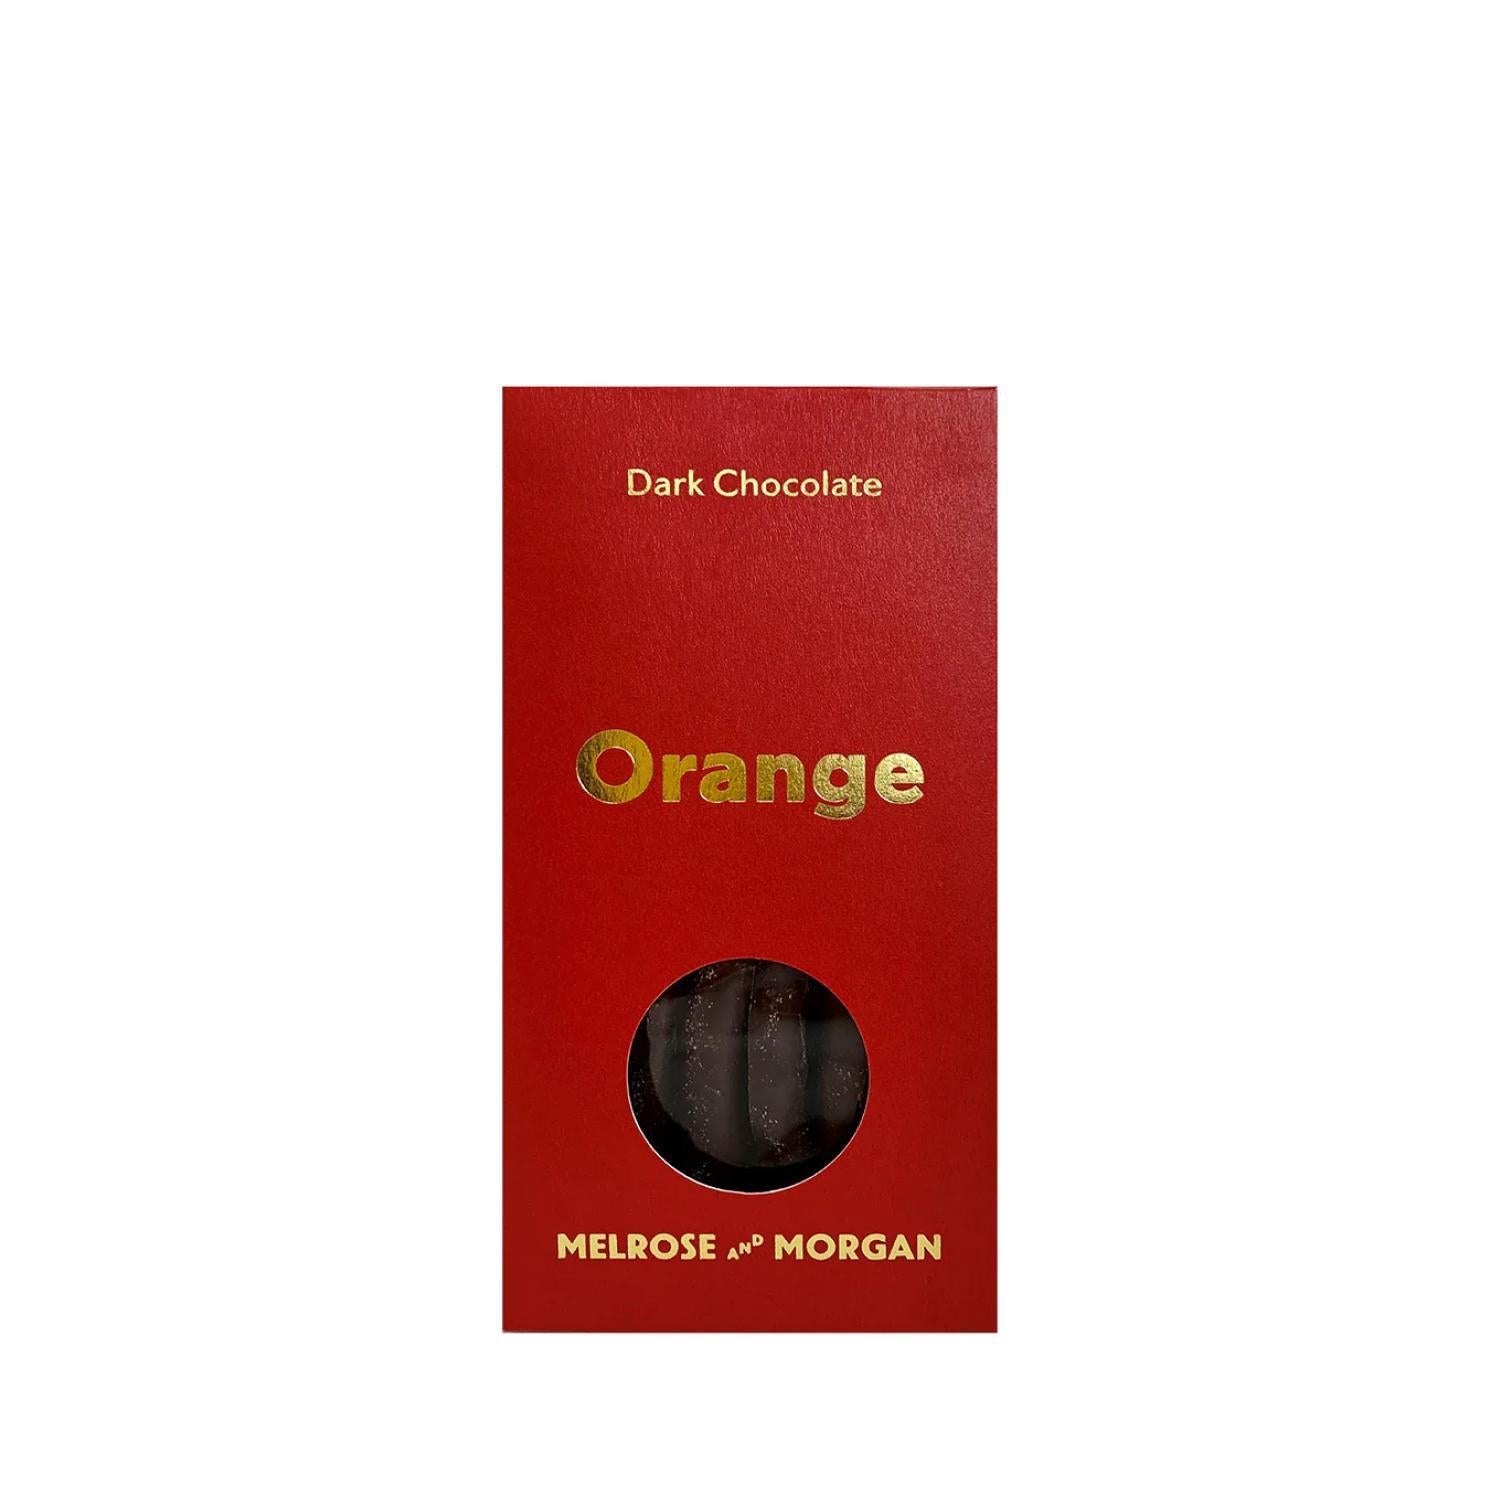 Melrose & Morgan - Dark Chocolate Oranges Box